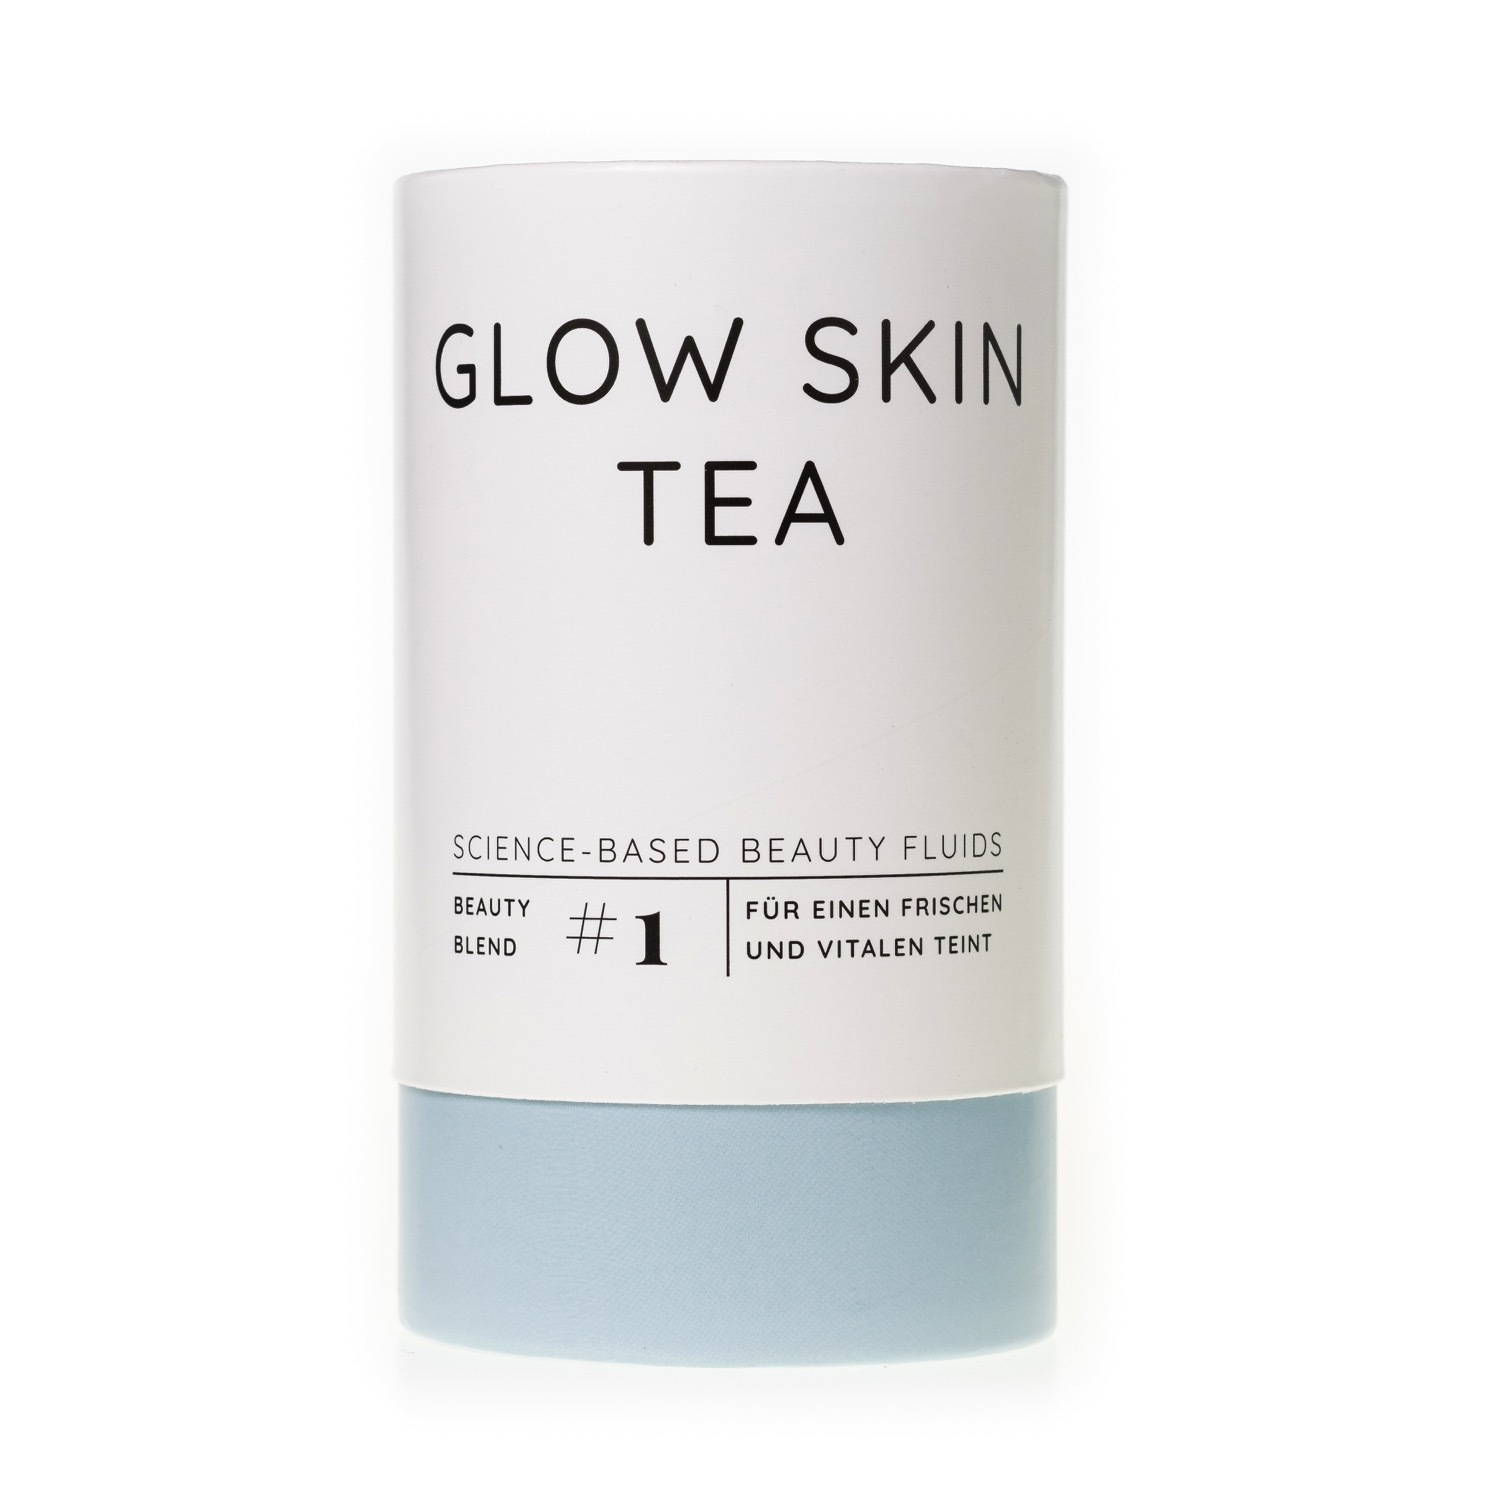 Glow Skin Tea